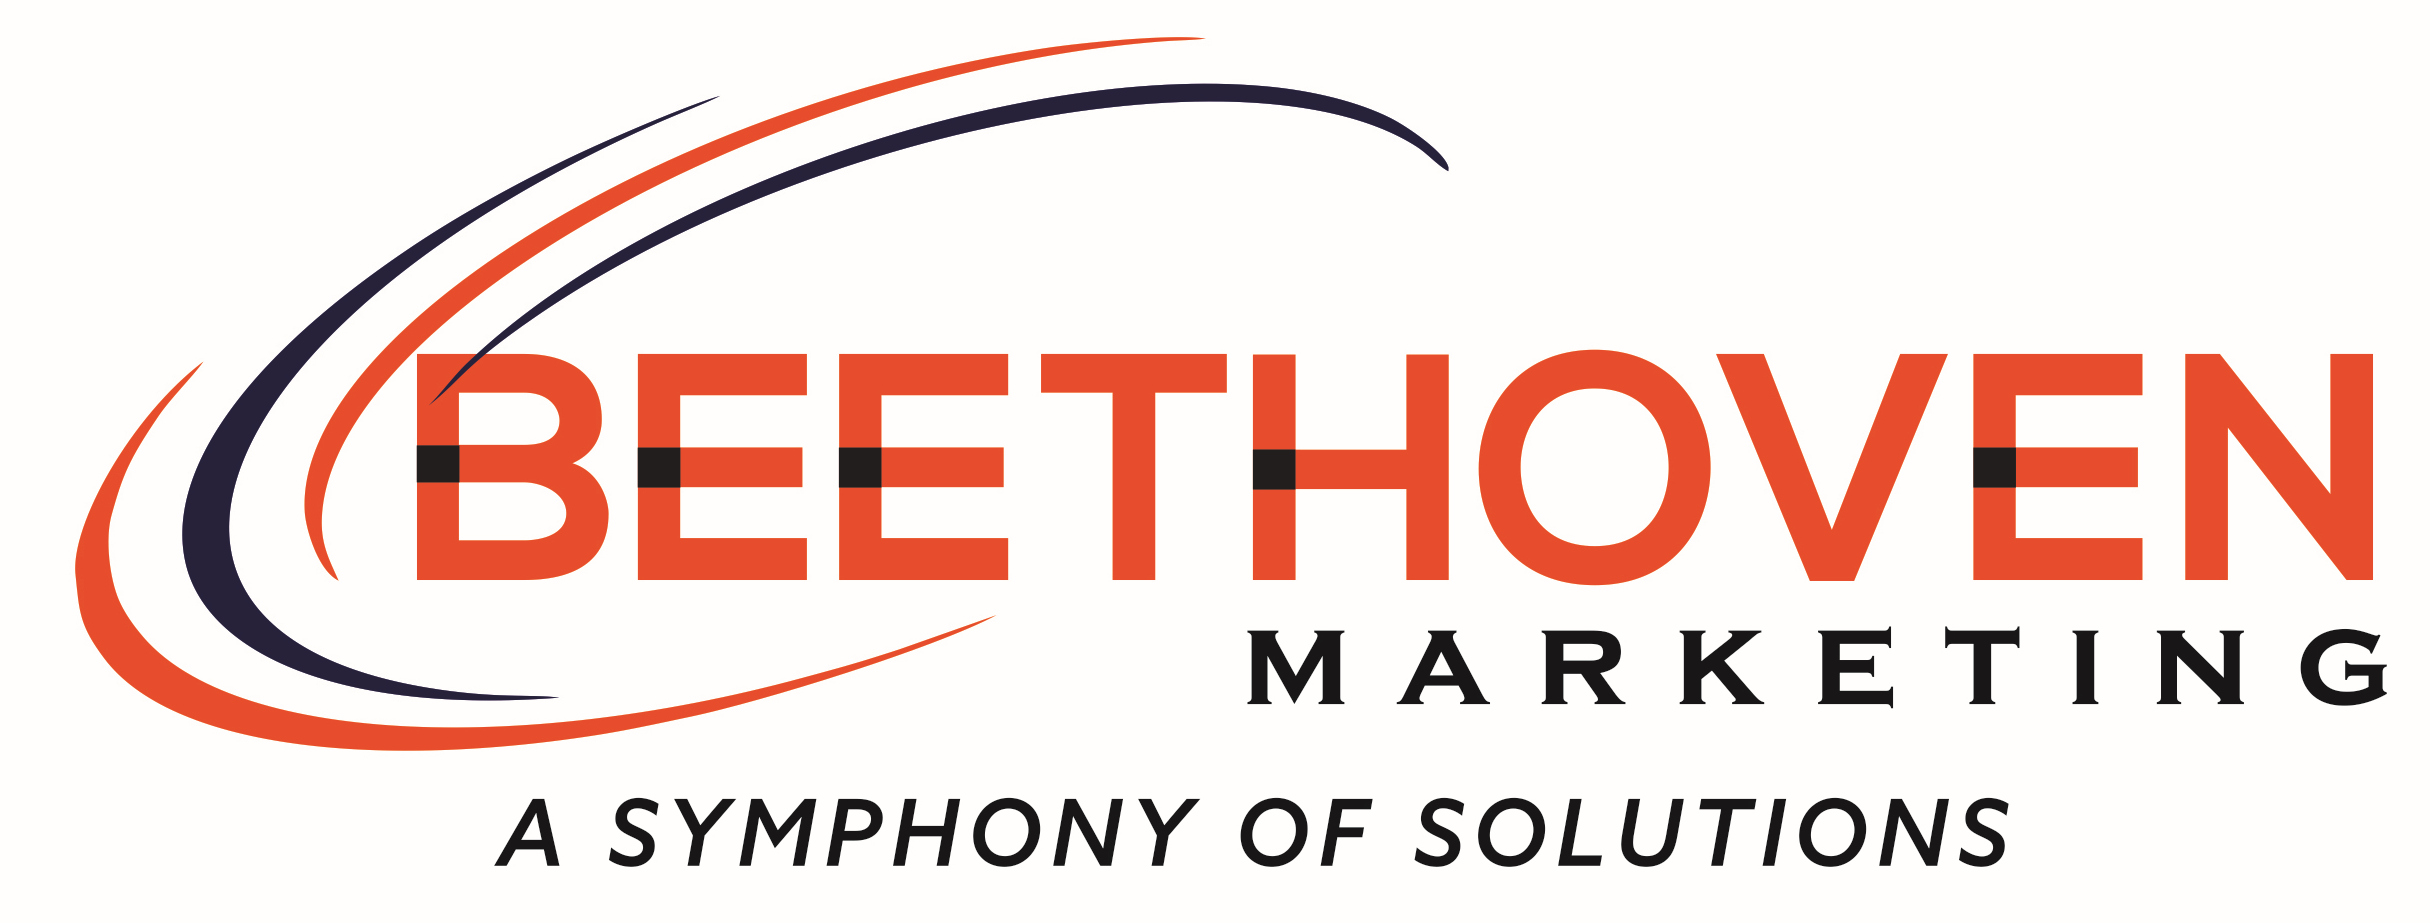 Beethoven Marketing, Inc.'s Logo